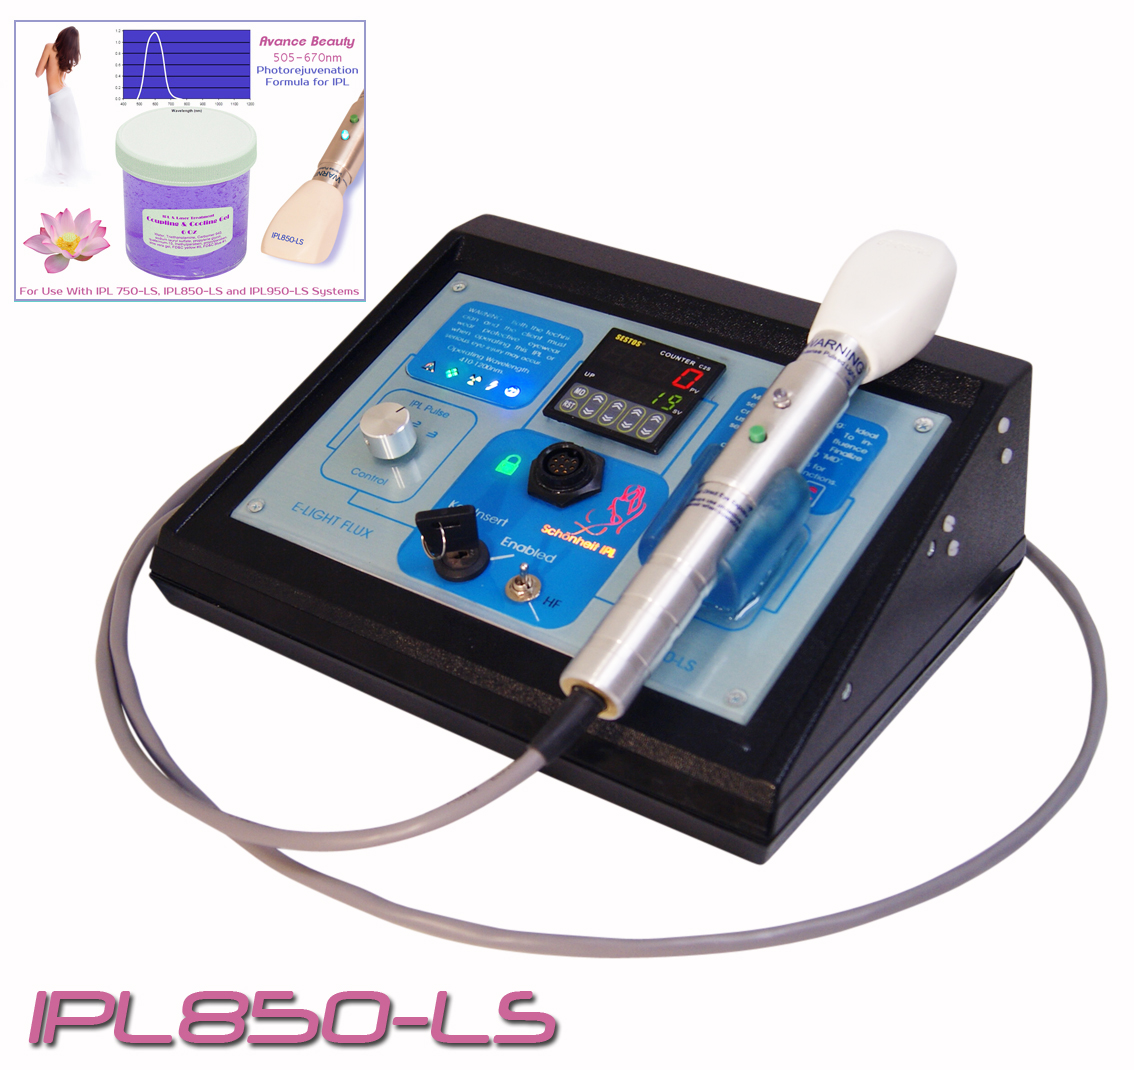 IPL850-LS Photorejuvenation Kit 505-670nm with Beauty Treatment Machine, System, Device.  642057128599